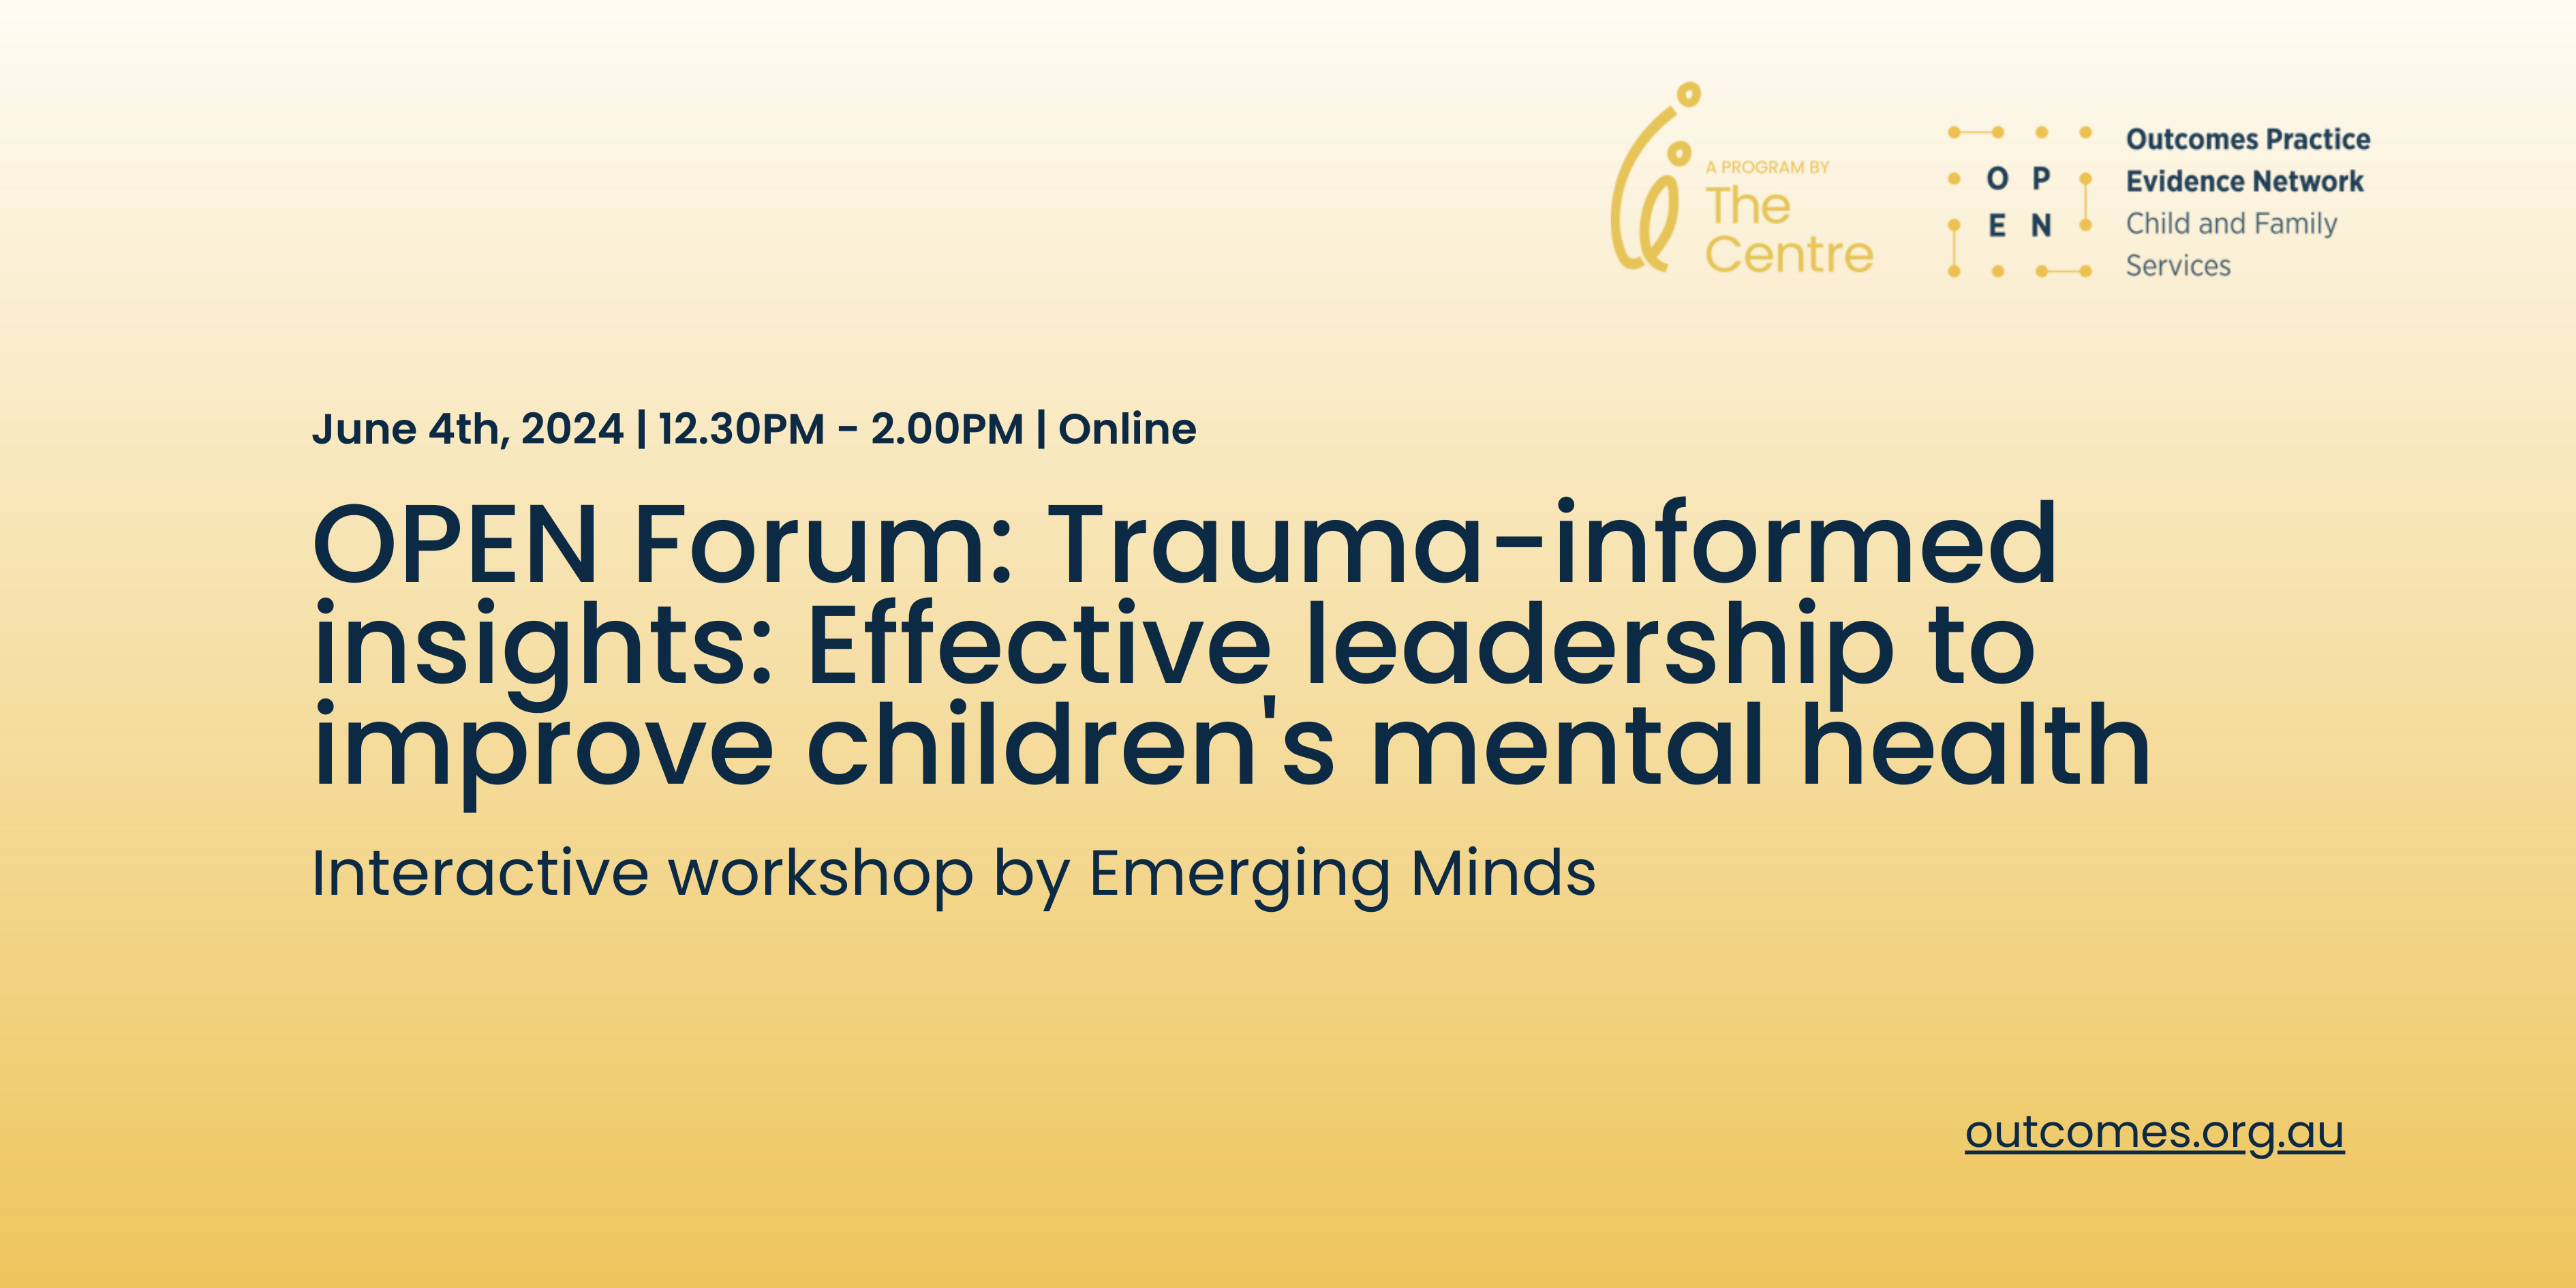 OPEN Forum: Trauma-informed insights. Effective leadership to improve children's mental health